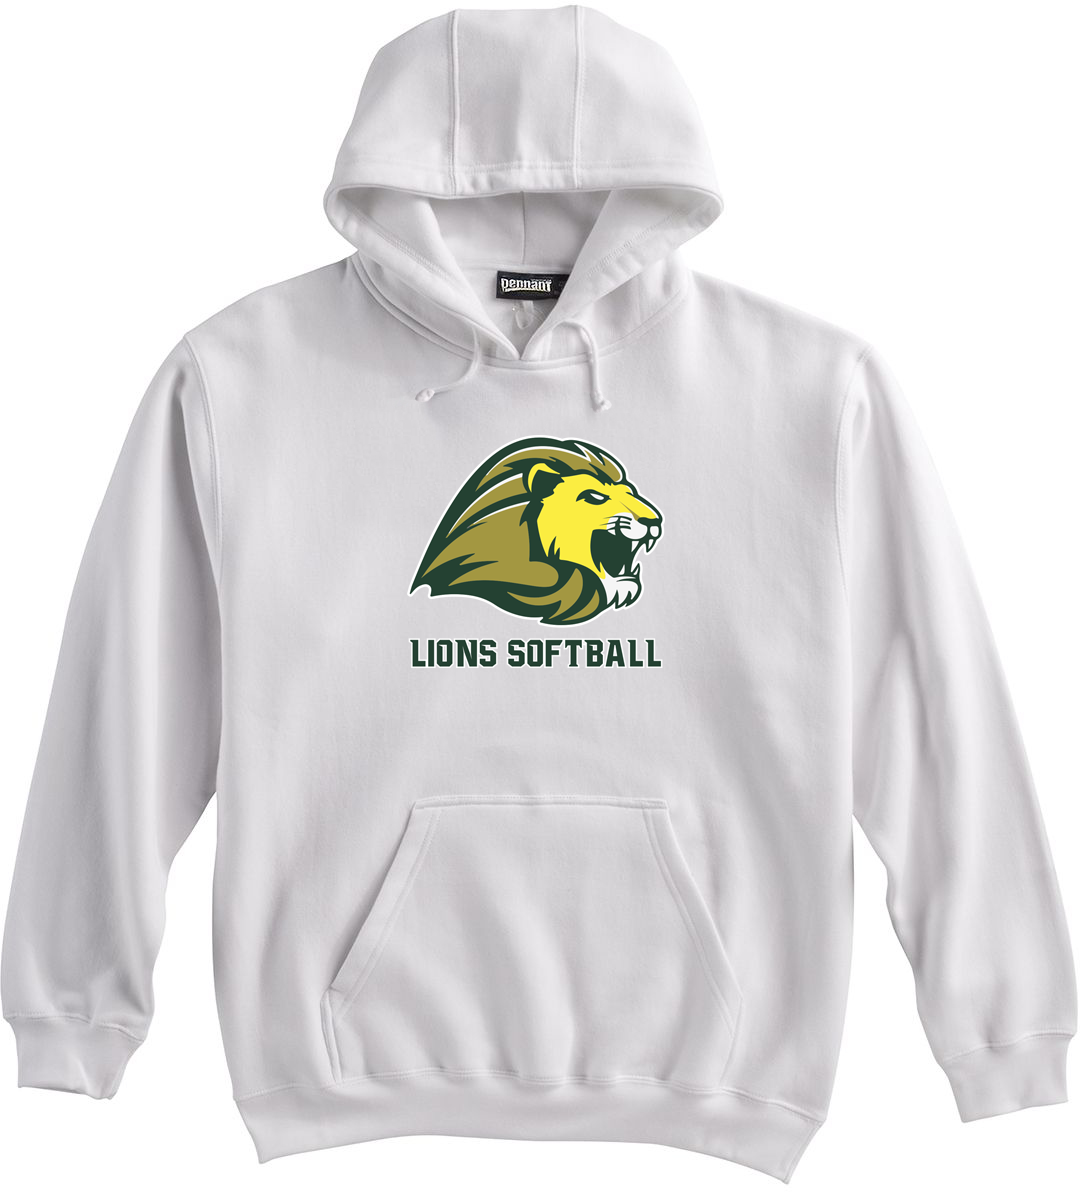 EP Lions Softball Sweatshirt